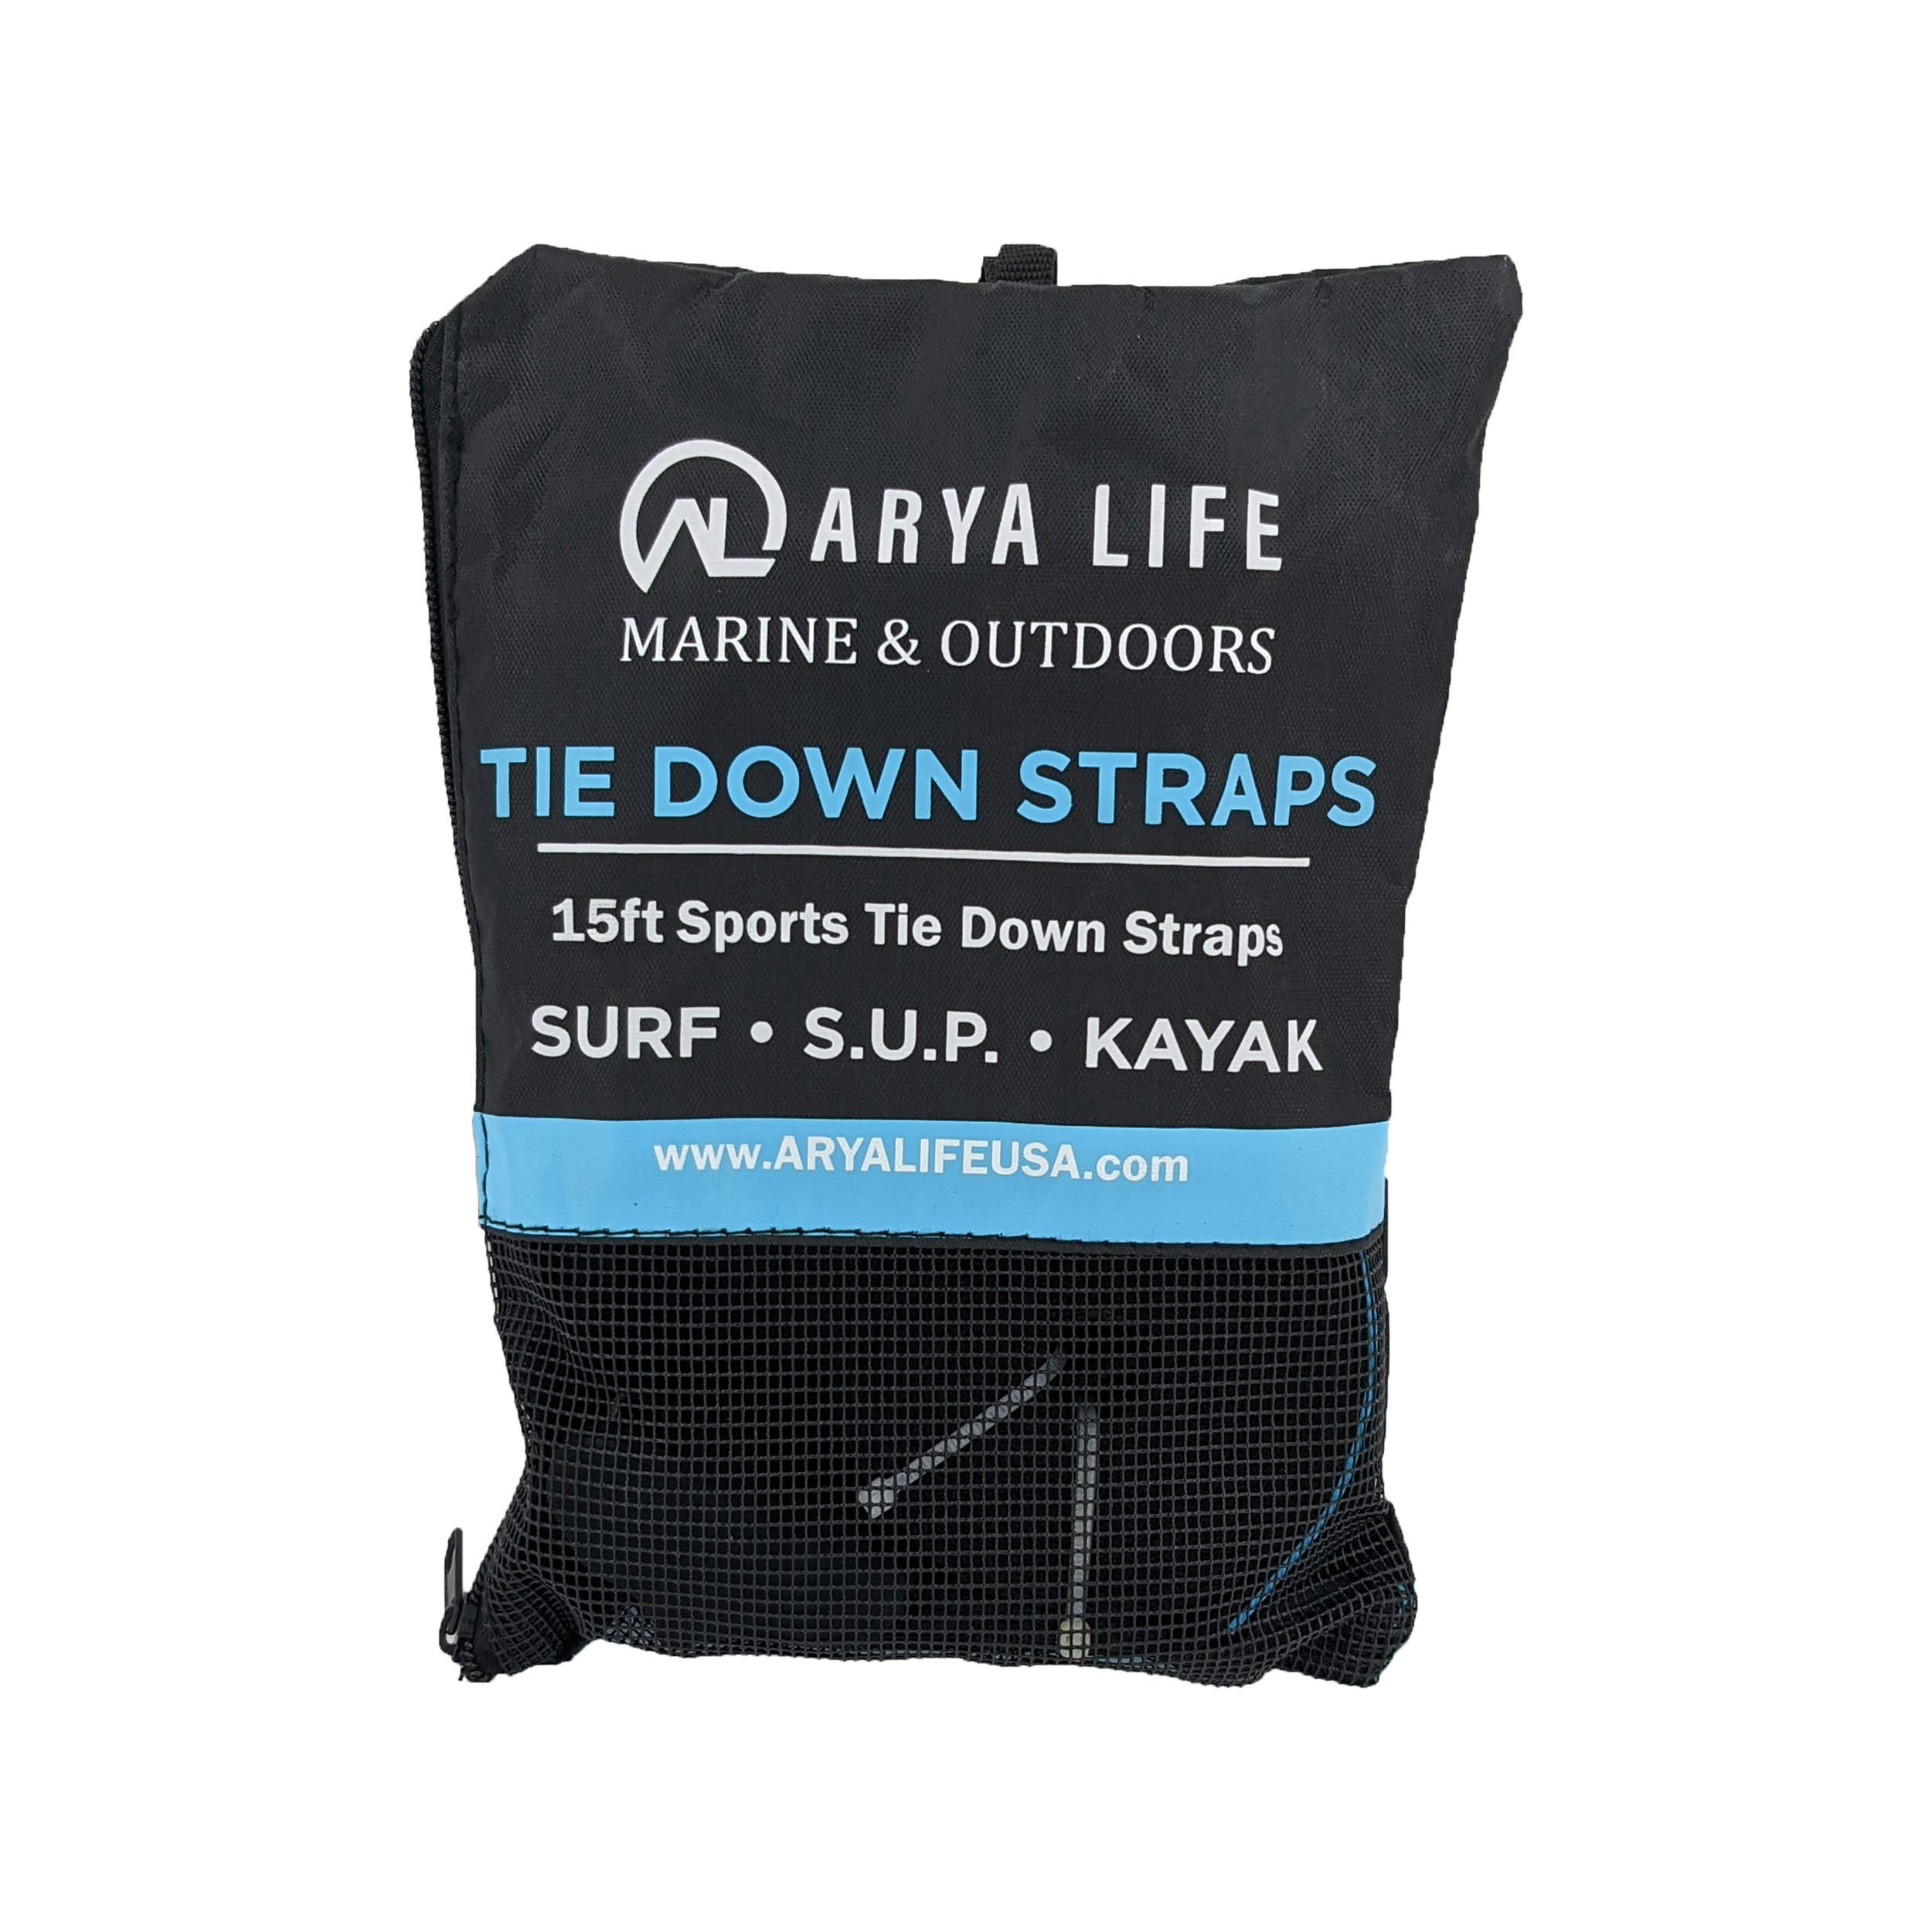 Arya Life 15ft Tie Down Straps bag